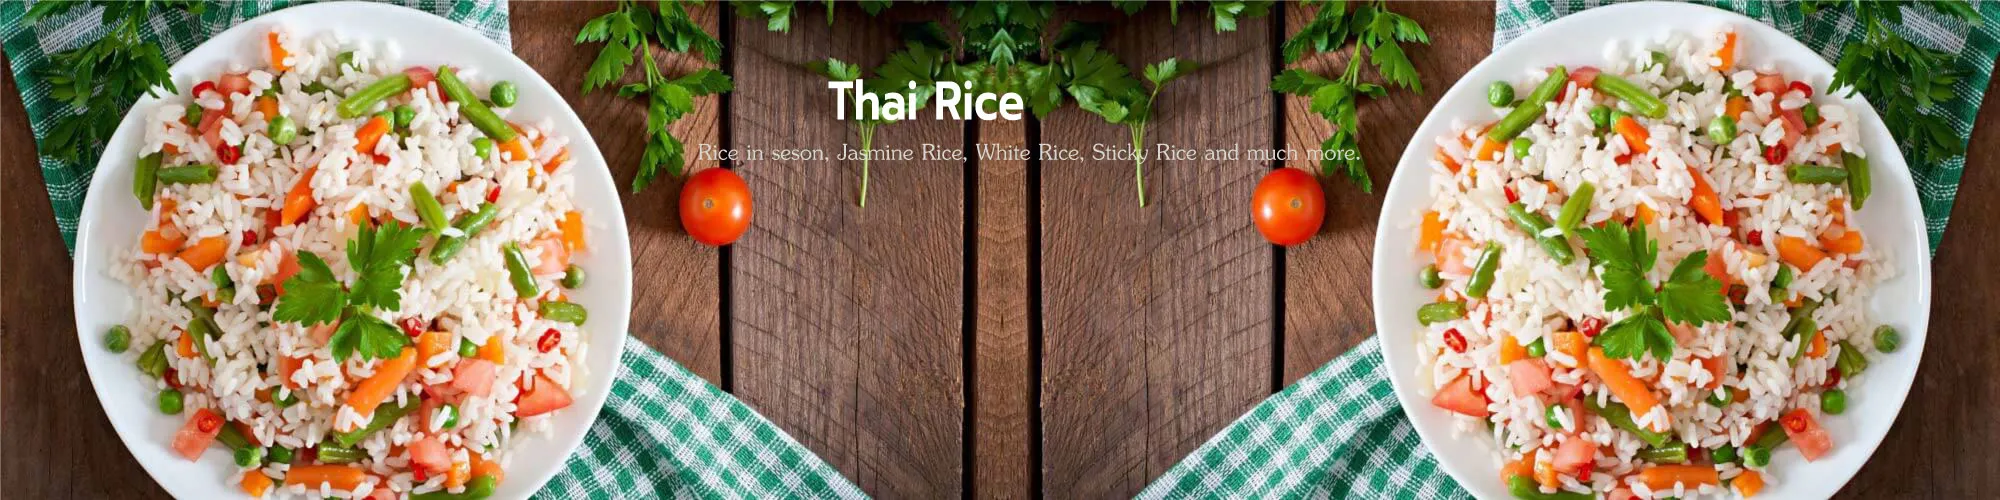 Rice in seson, jasmine rice thailand, White Rice, Sticky Rice, Brown Jasmine Rice, Rice berry, Thai Red Jasmine Rice​